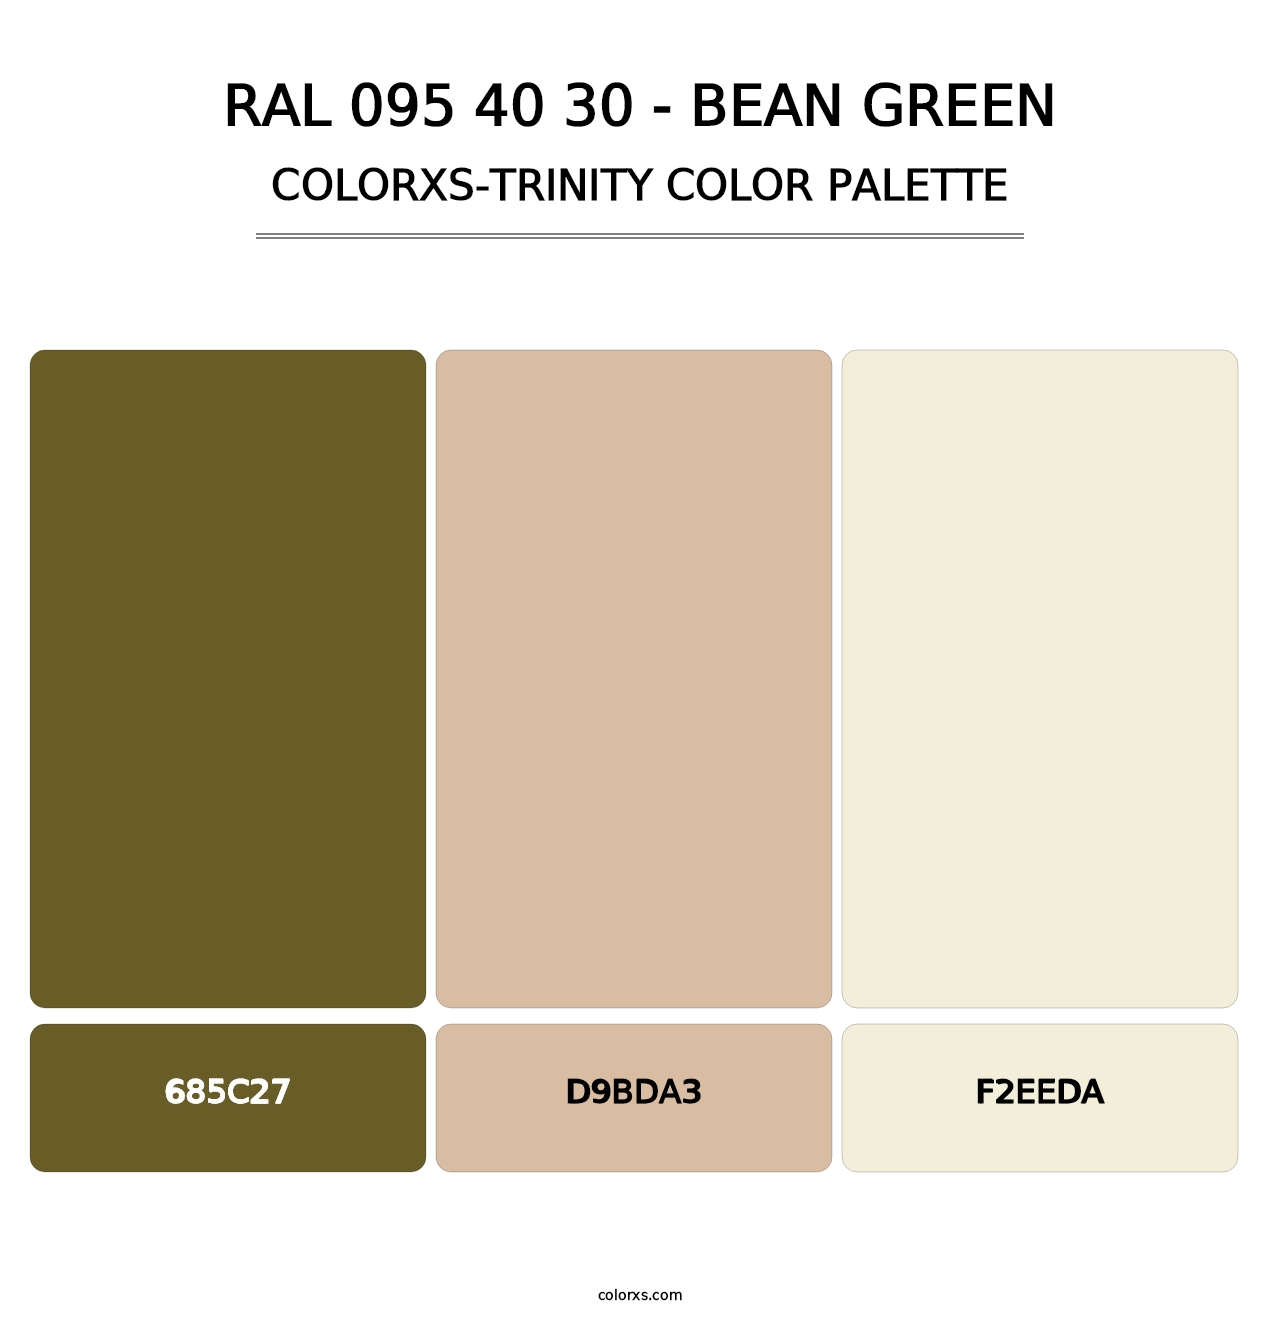 RAL 095 40 30 - Bean Green - Colorxs Trinity Palette